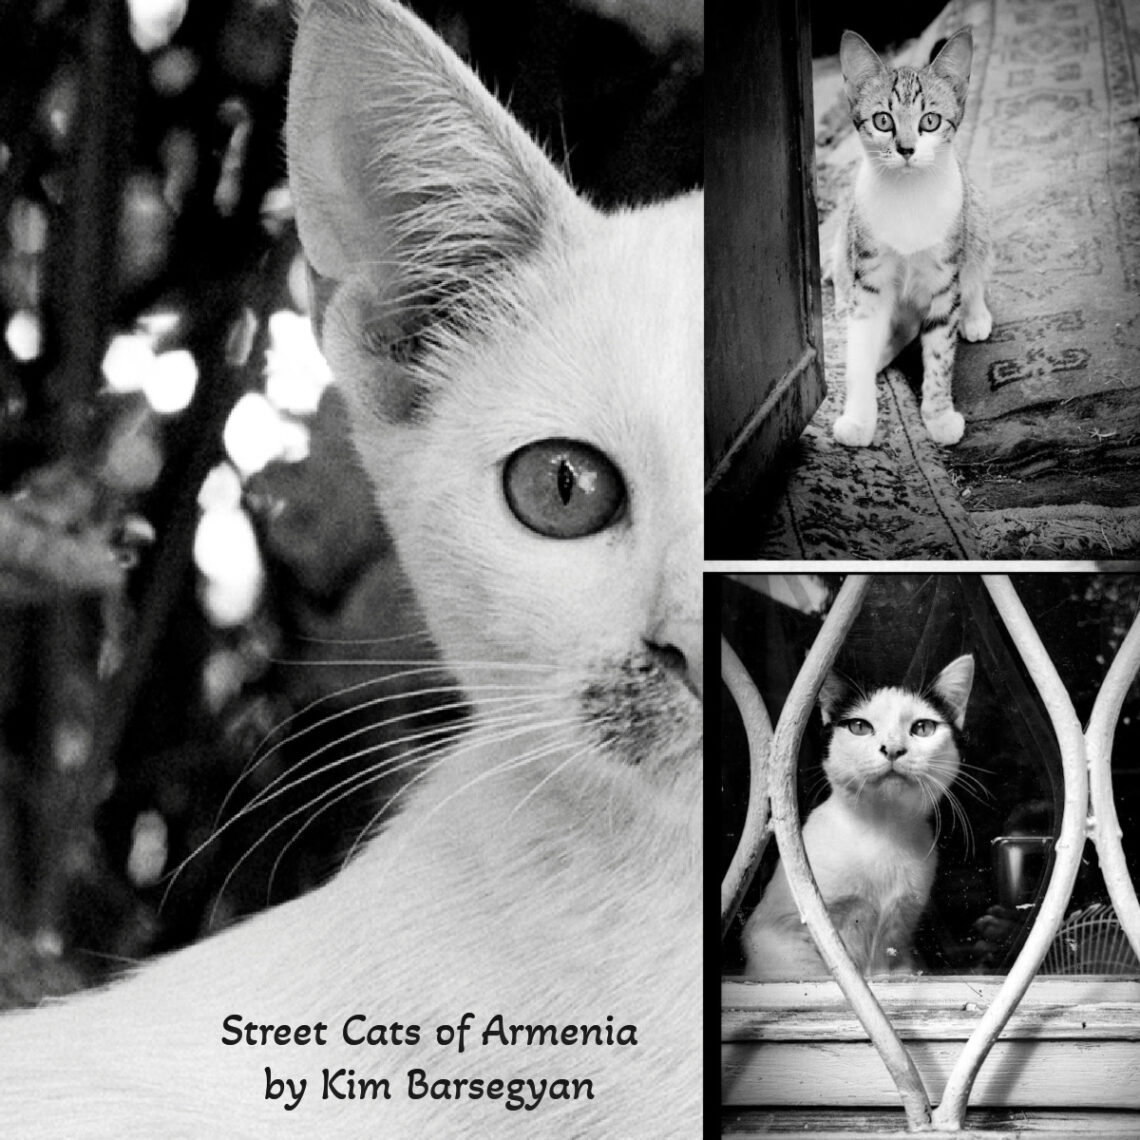 street cats of armenia by Kim Barsegyan